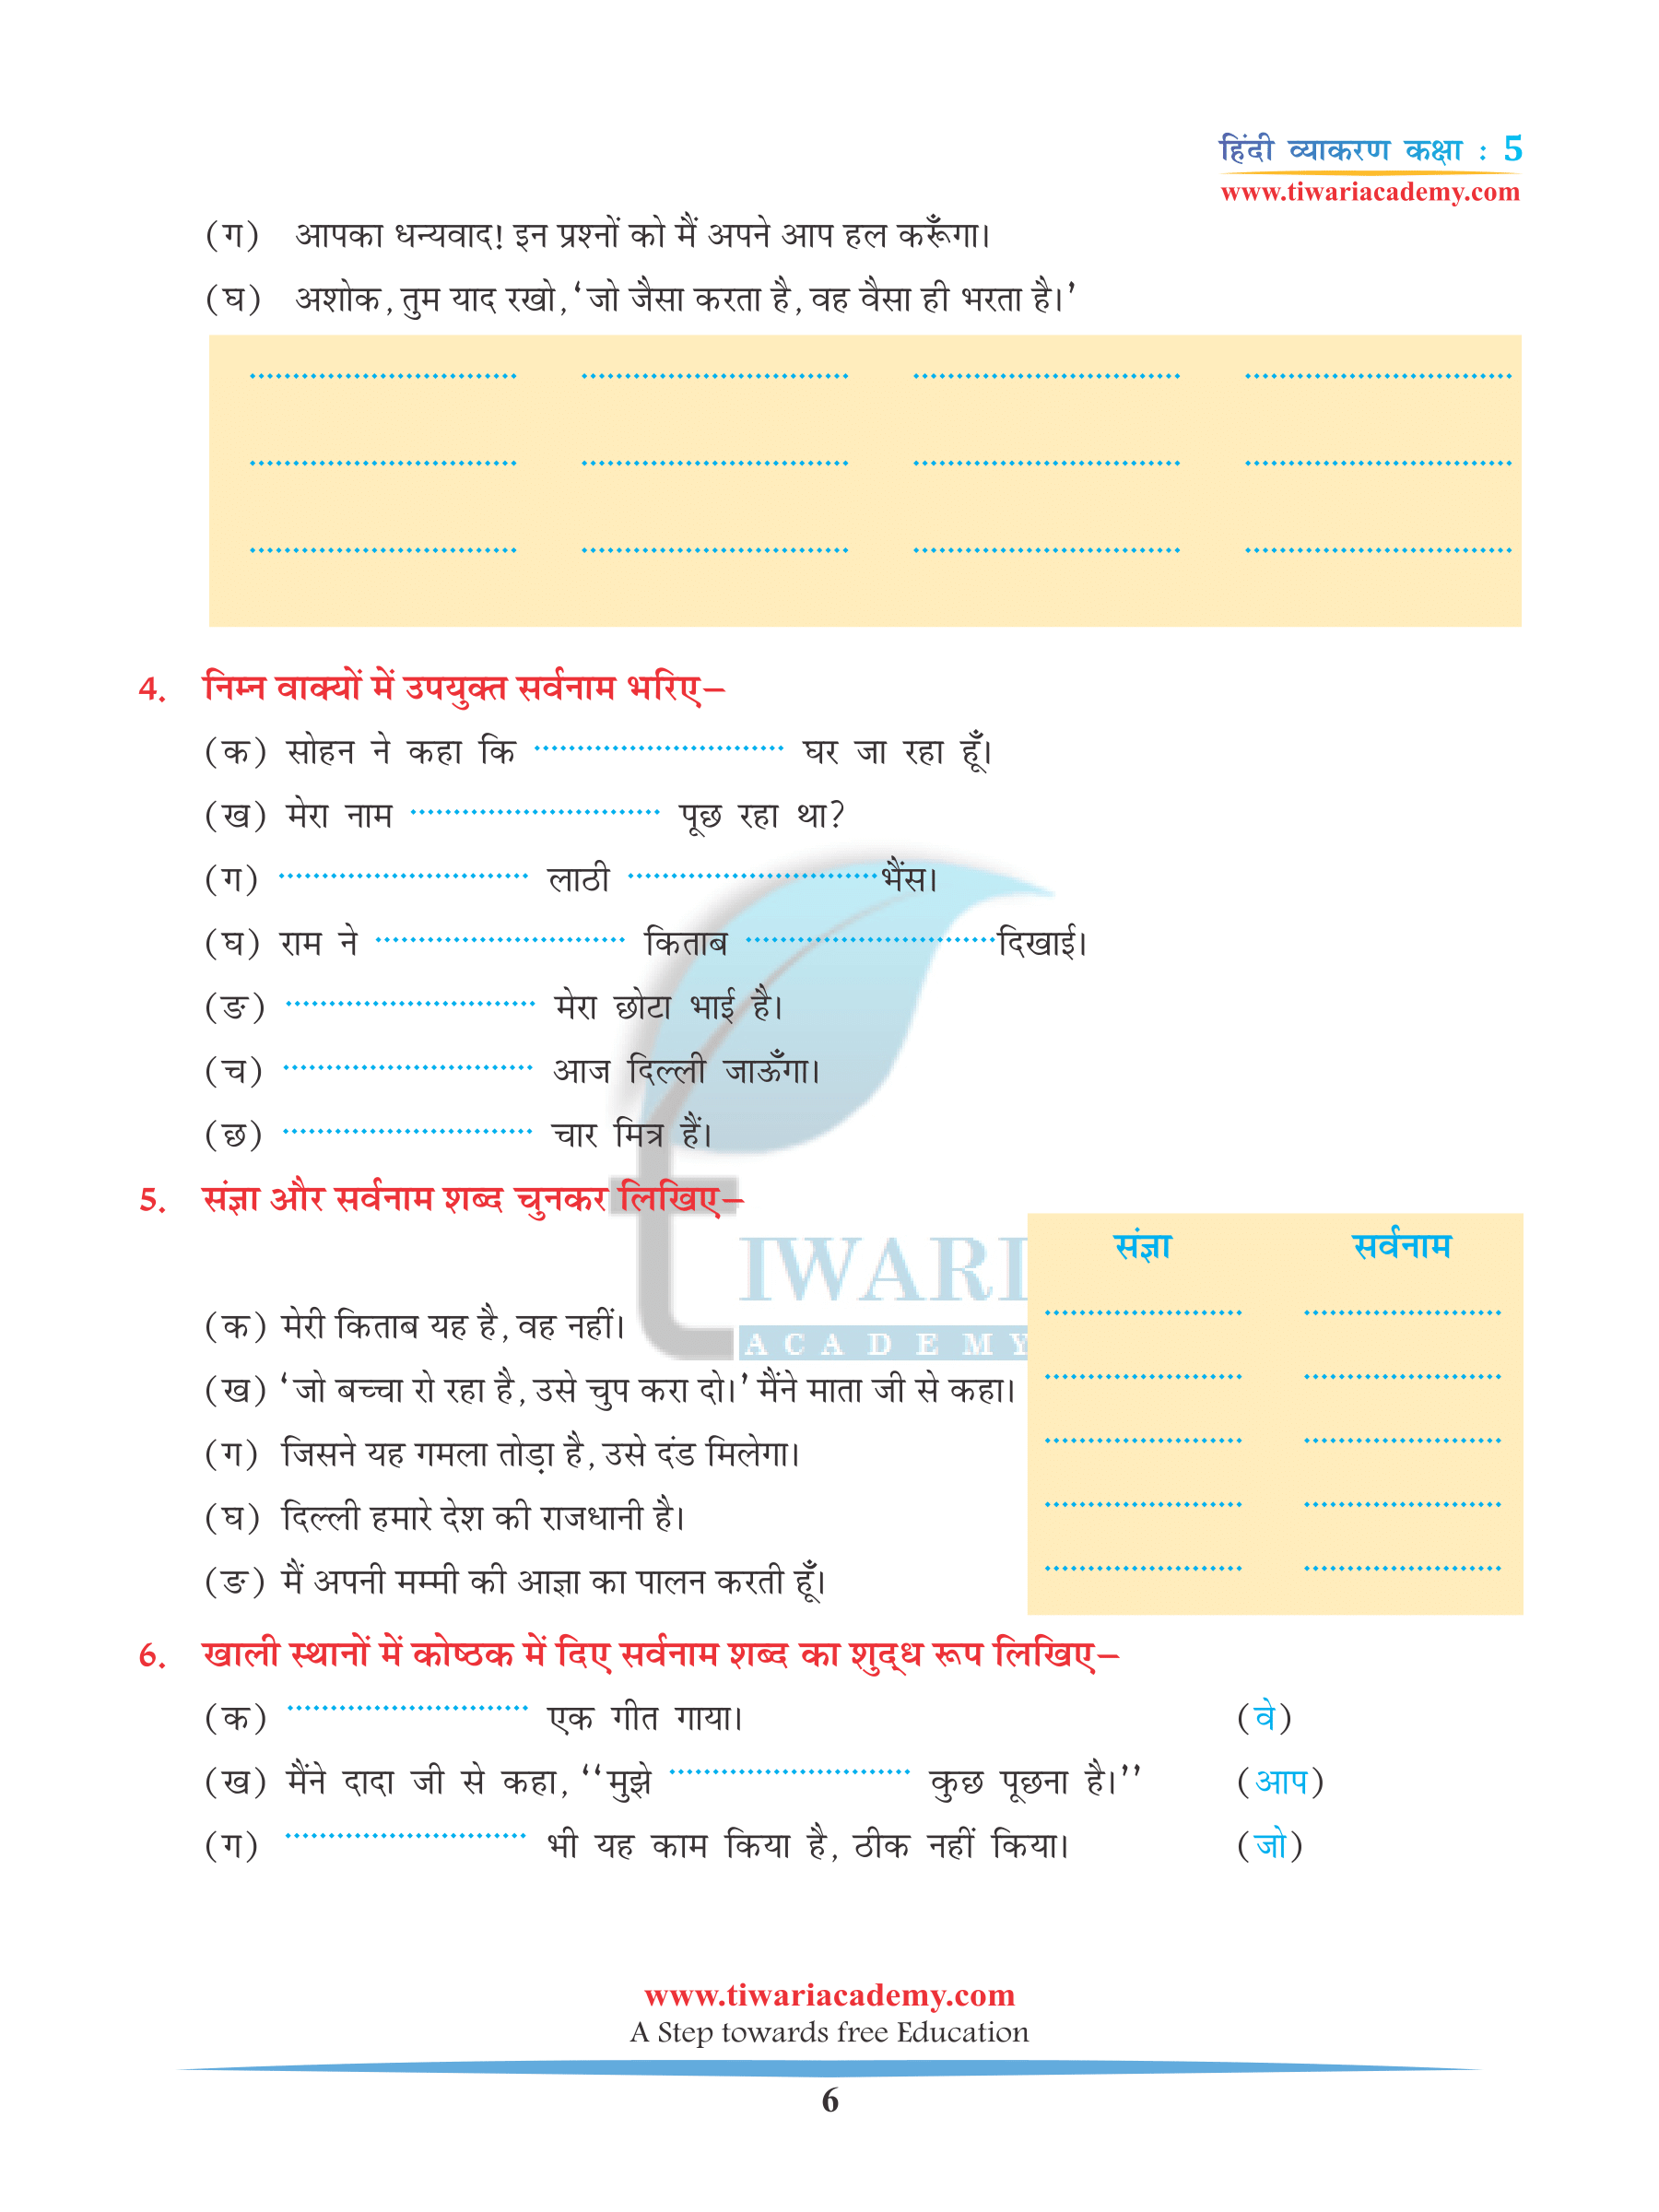 CBSE Class 5 Hindi Grammar Chapter 5 Sarvnam aur Sarvnam ke bhed Download